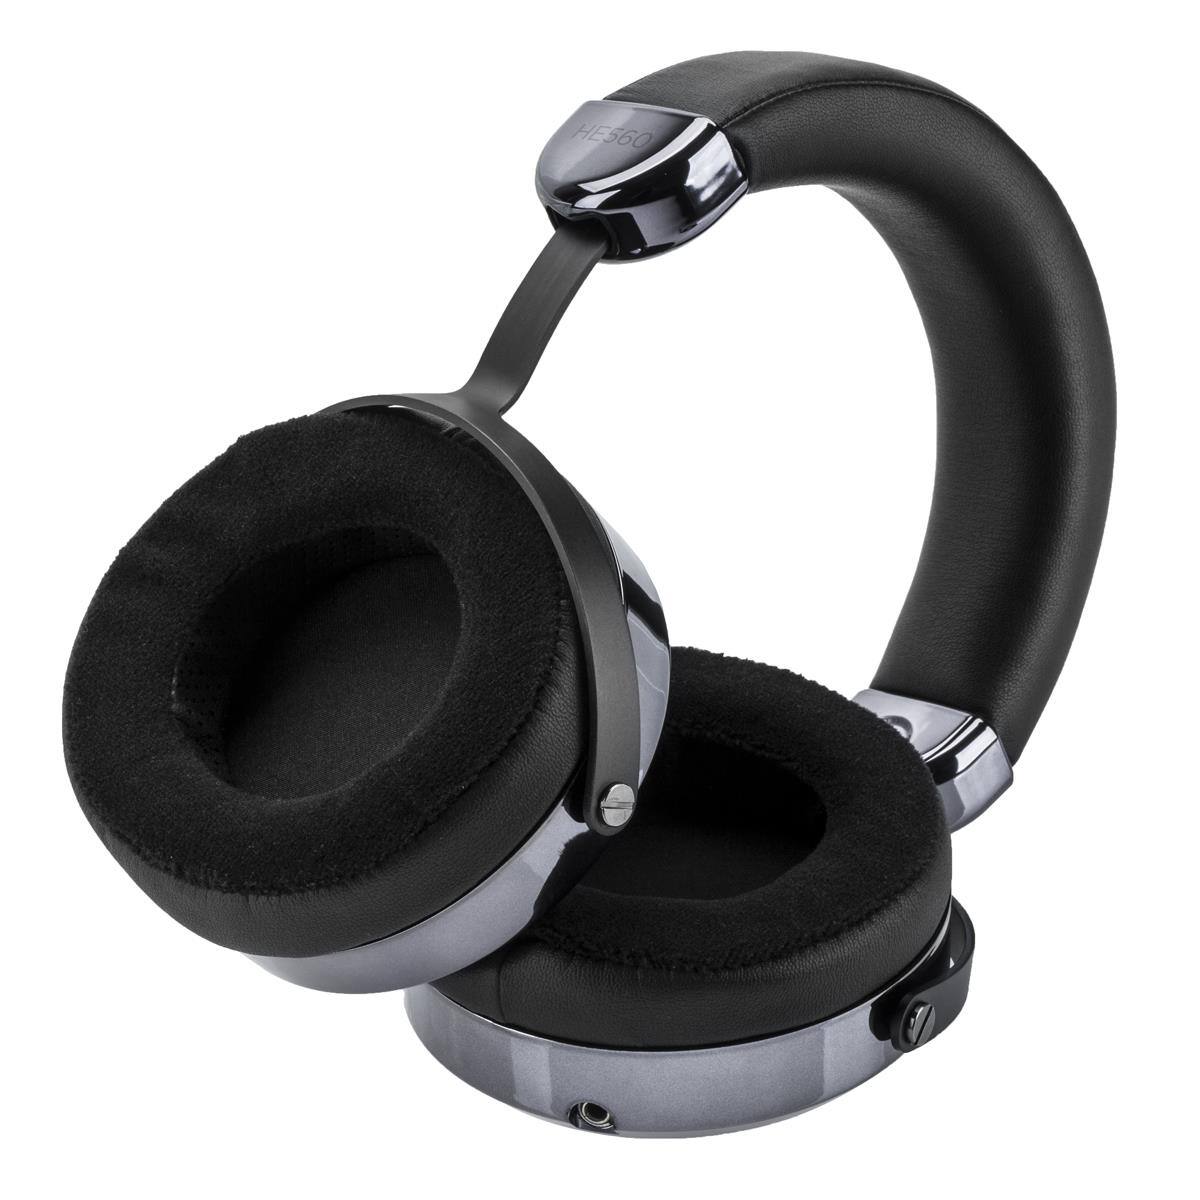 HiFiMan HE-560 V4 Planar Magnetic Headphone $249 + Free Shipping @ Adorama